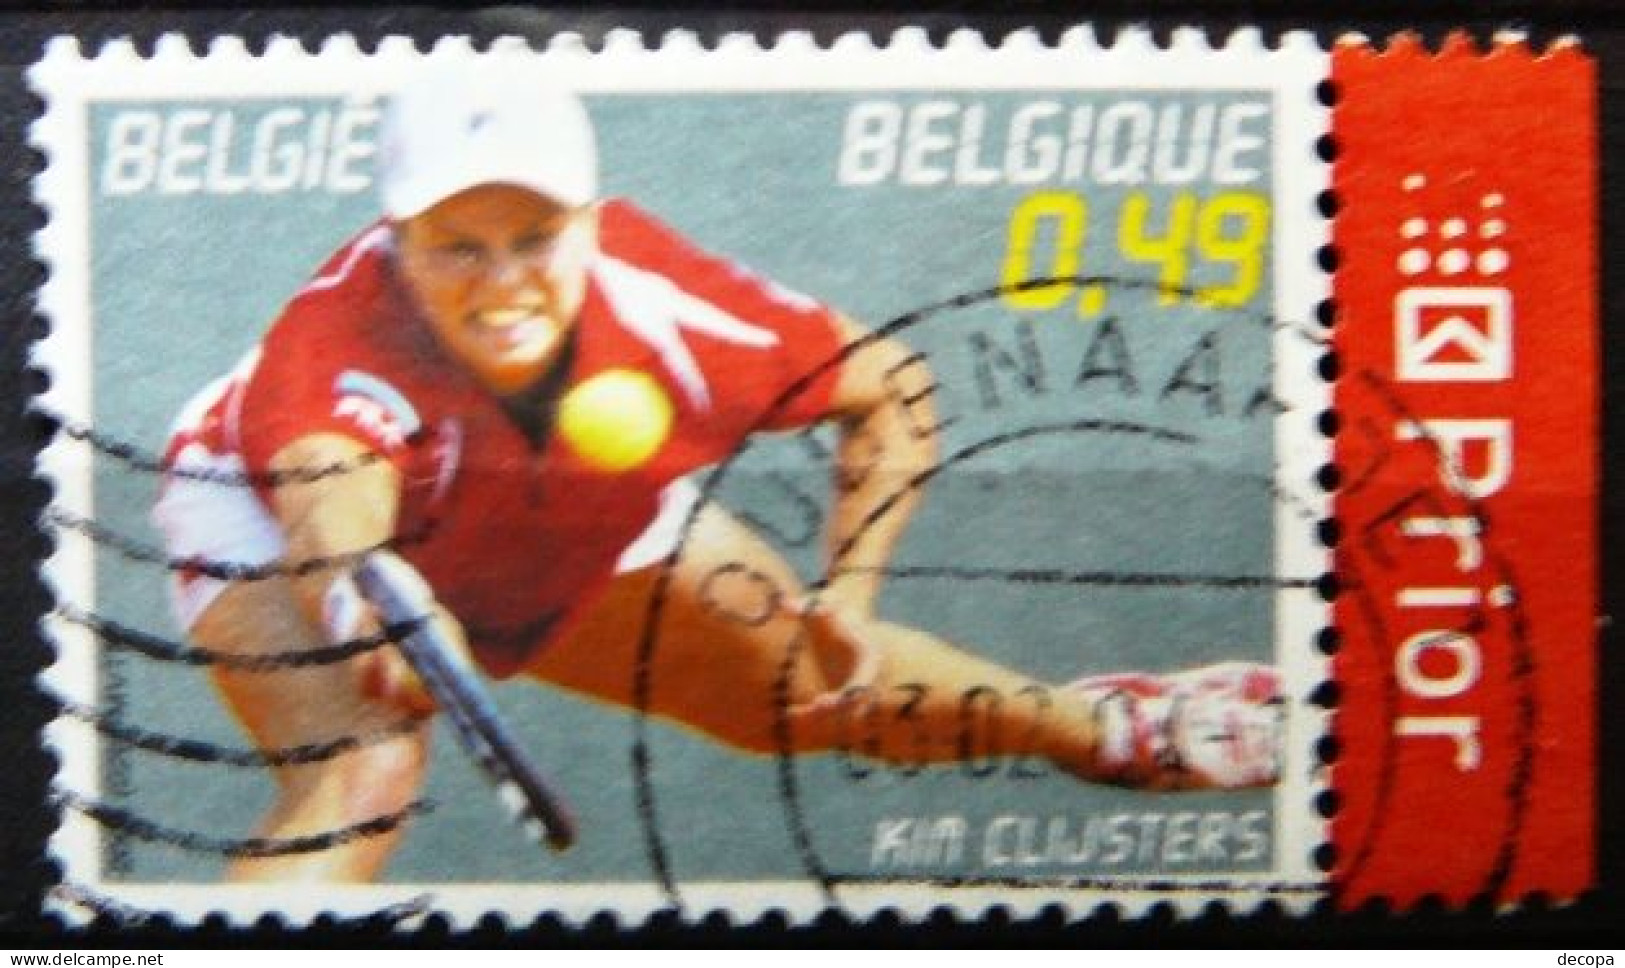 (dcbnp-096)  Belgium Mi 3275 Used : Kim Clijsters - Tenis